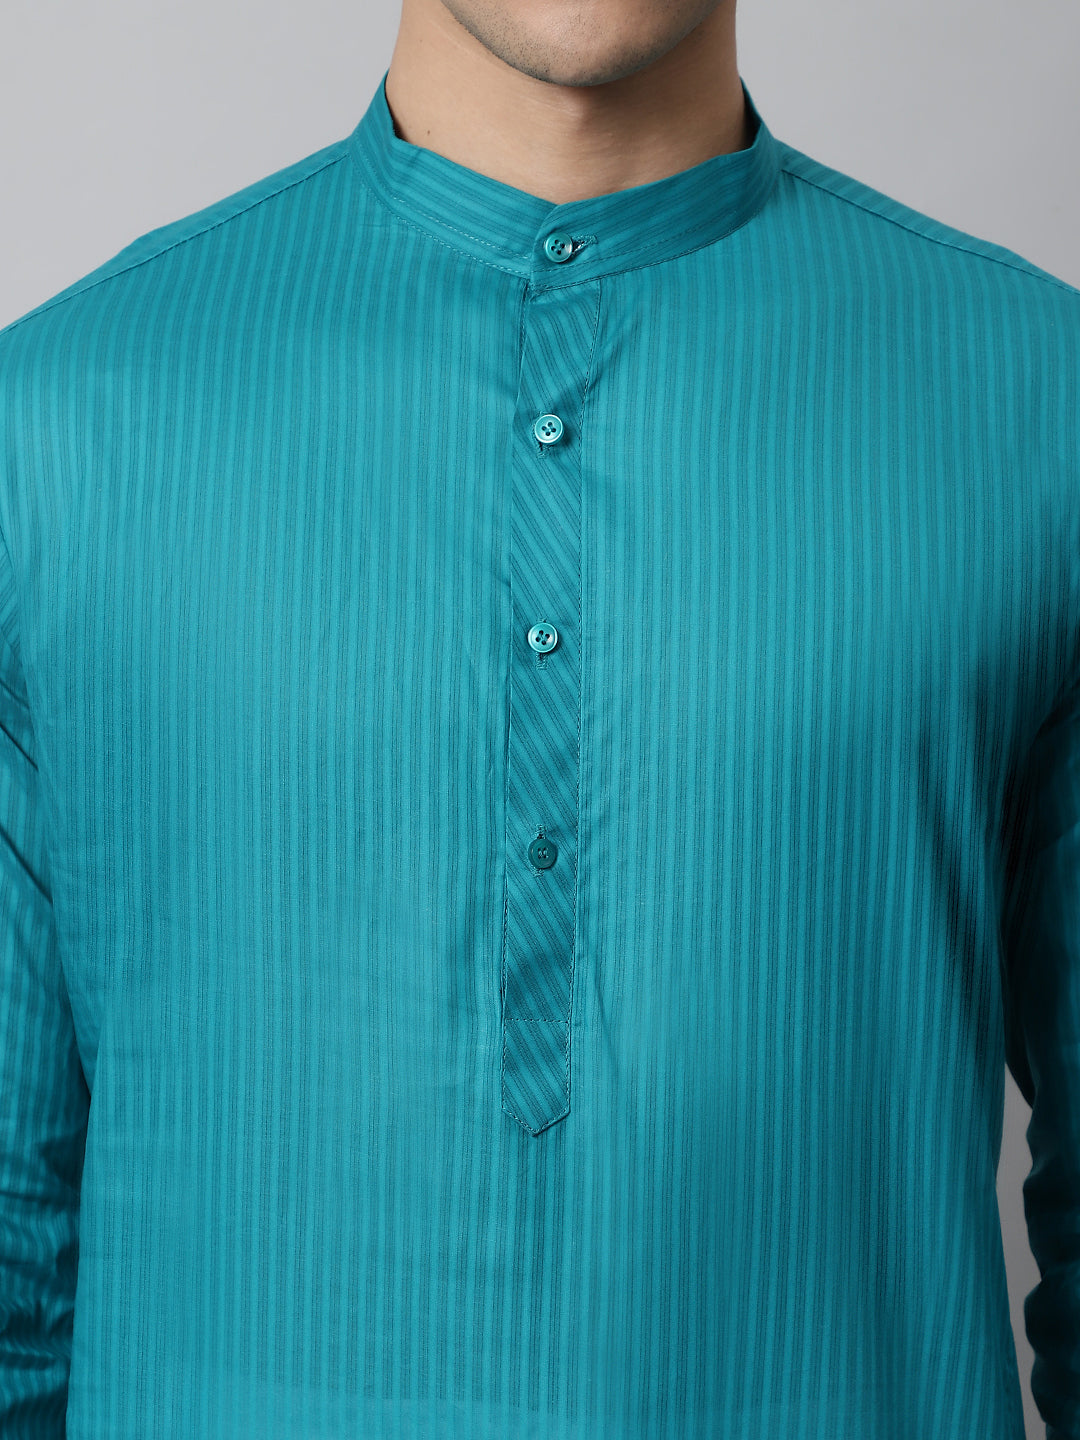 Jompers Men's Teal Blue Cotton Striped Kurta Payjama Sets ( JOKP 679Teal )